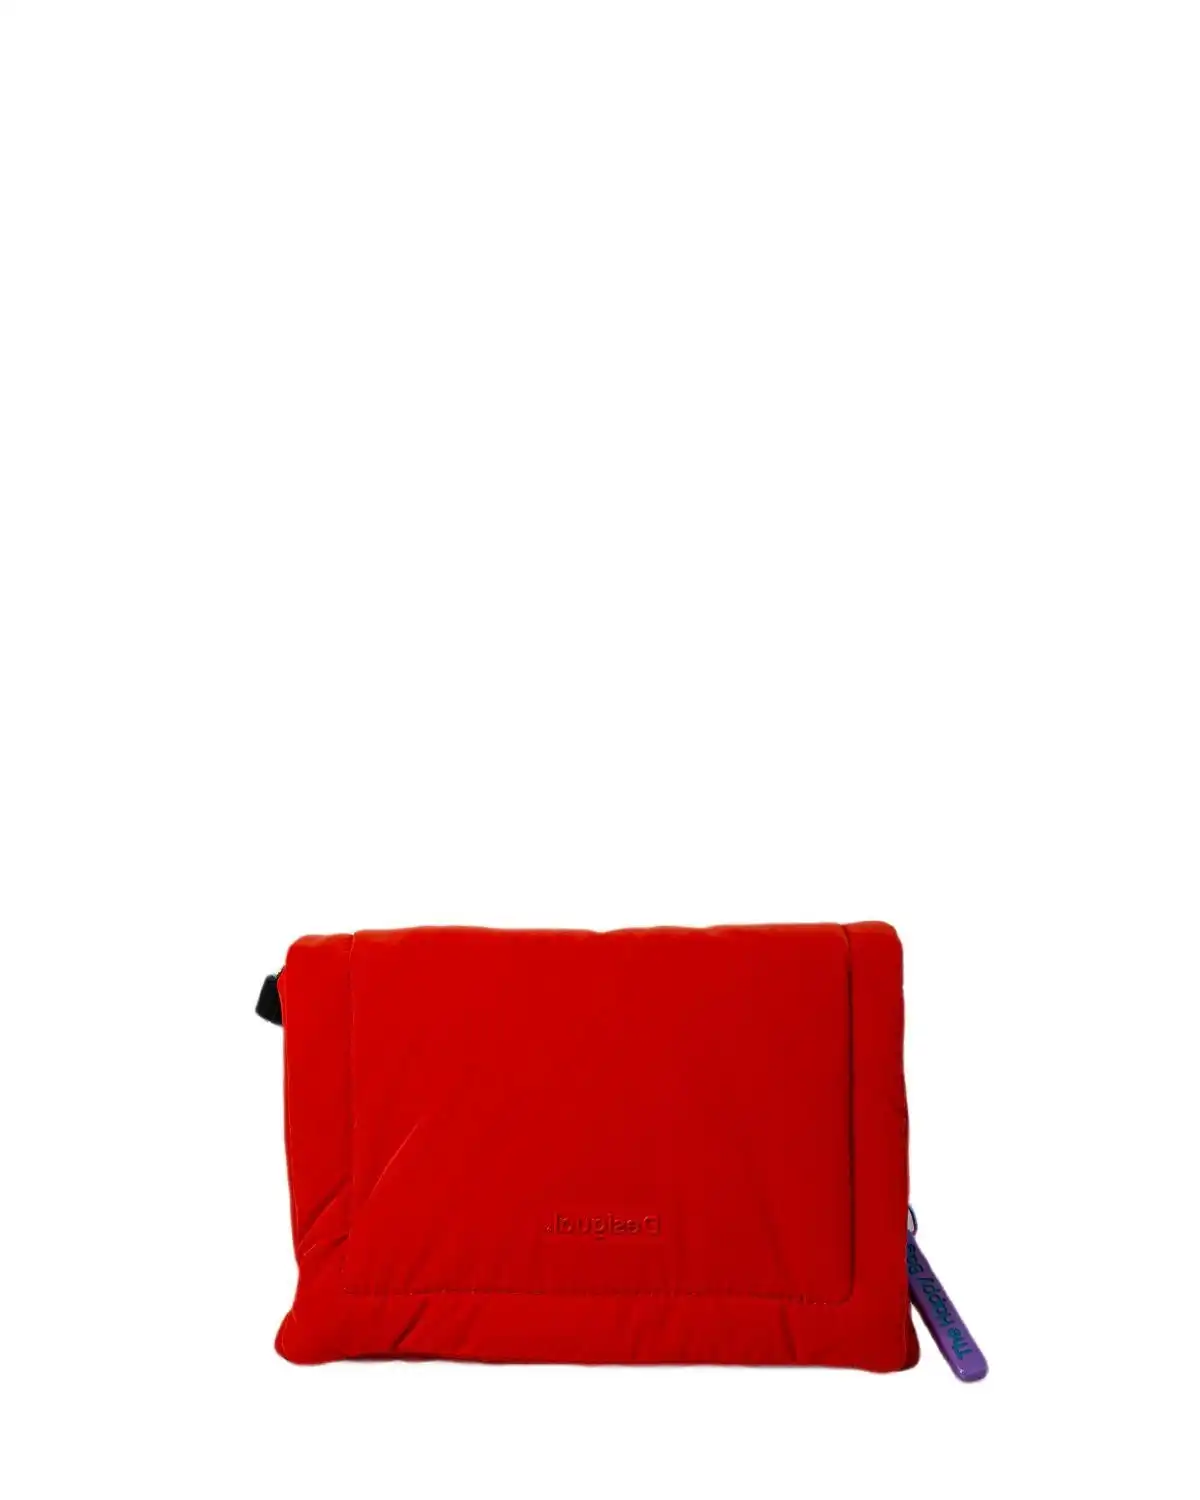 Desigual Women's Bag In Red